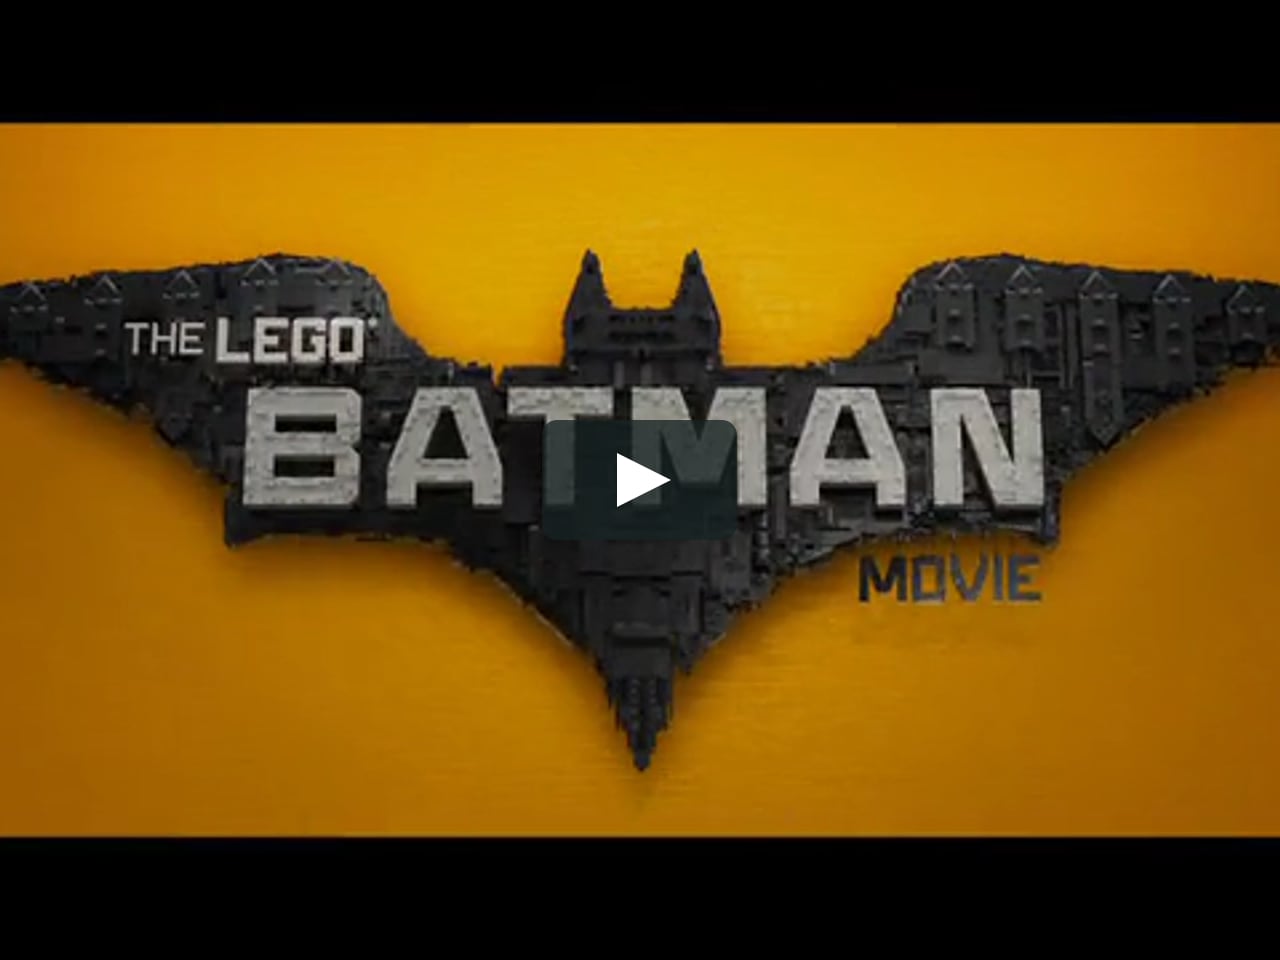 THE LEGO BATMAN MOVIE - Official trailer on Vimeo